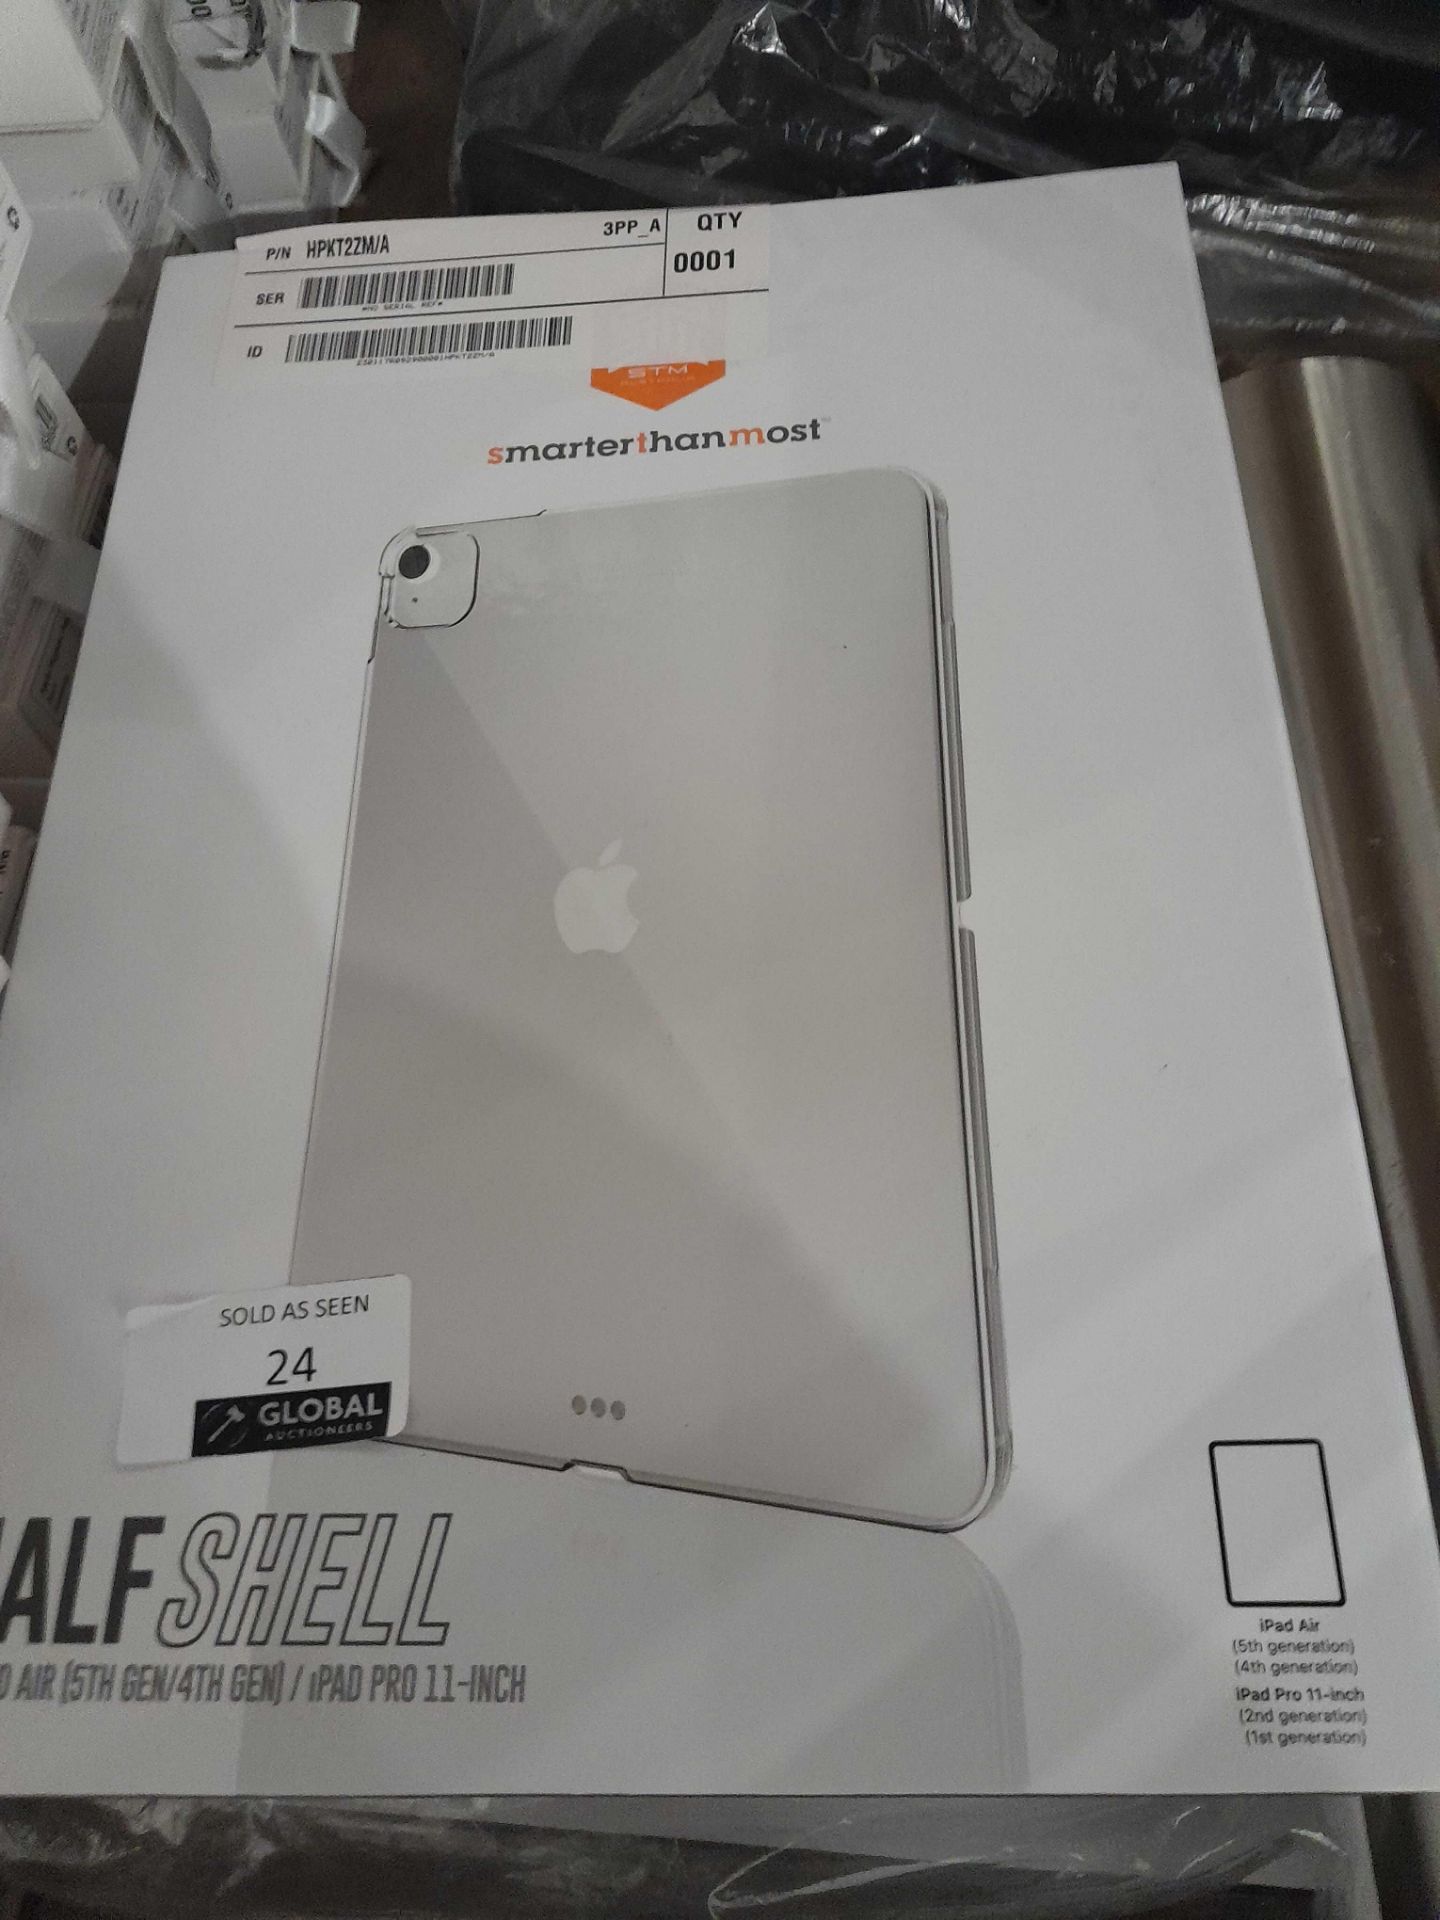 RRP £200 X5 Boxed Smarterthanmost Half Shell iPad Air Case (5Th Gen/4Th Gen/iPad Pro - 11Inc - Image 2 of 2